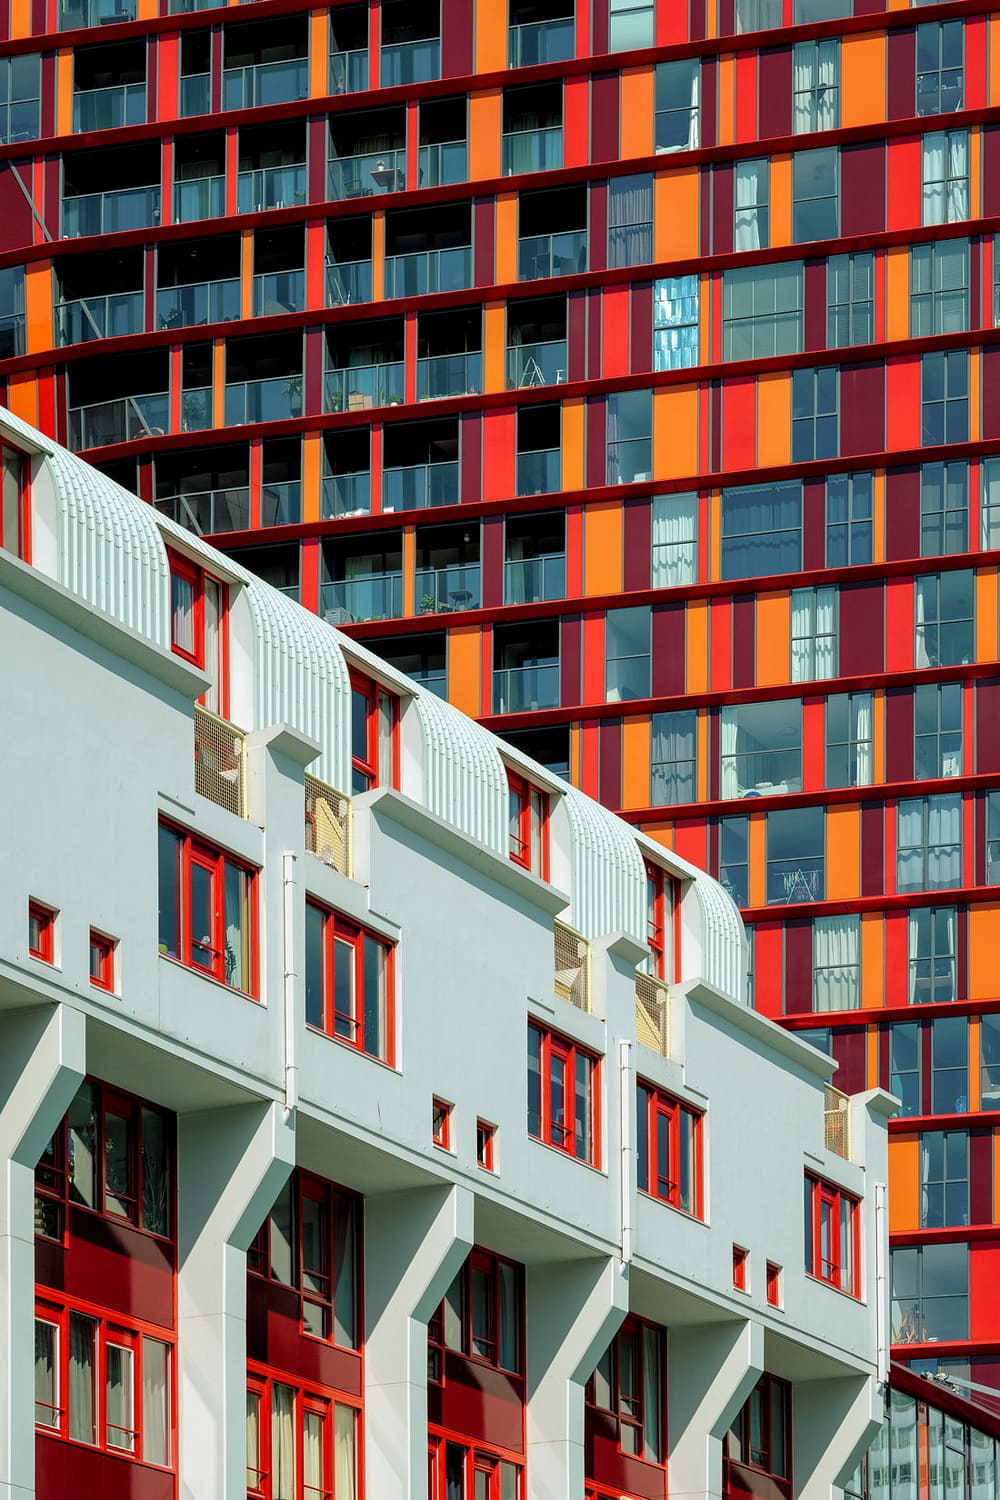 Rotterdam's modern architecture